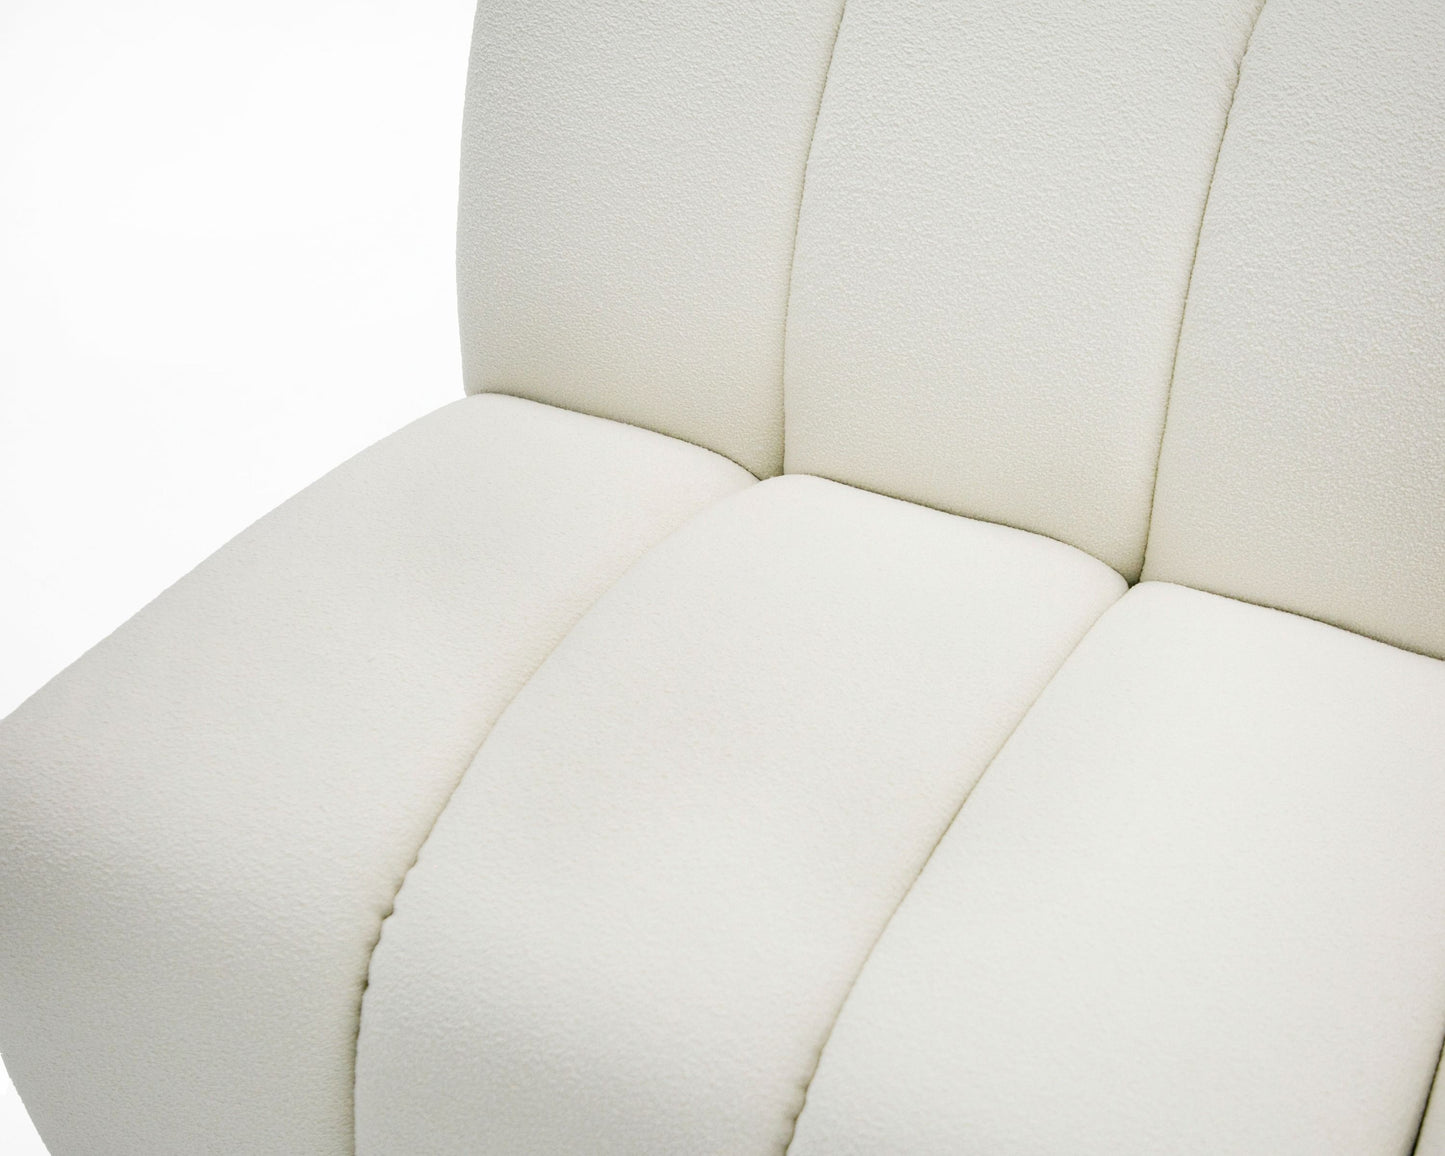 Divani Casa Olandi - Modern White Fabric Curved Sectional Sofa